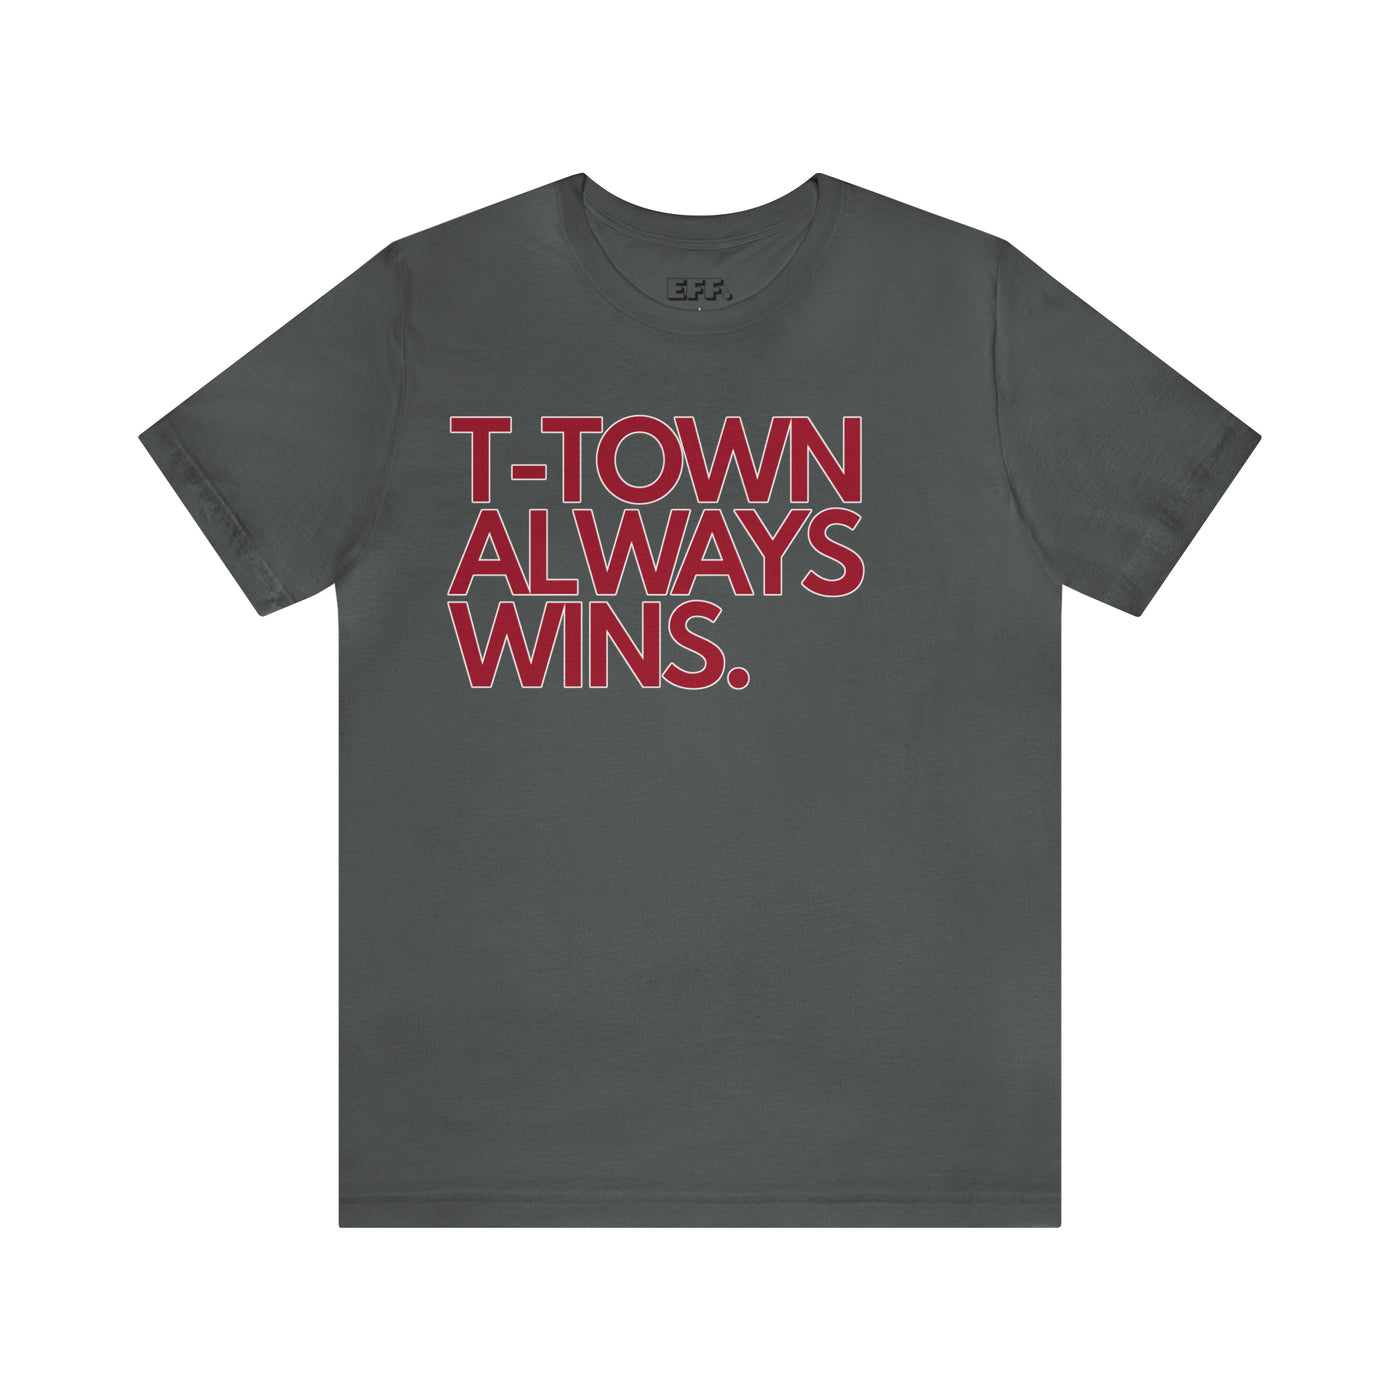 T-Town Always Wins.